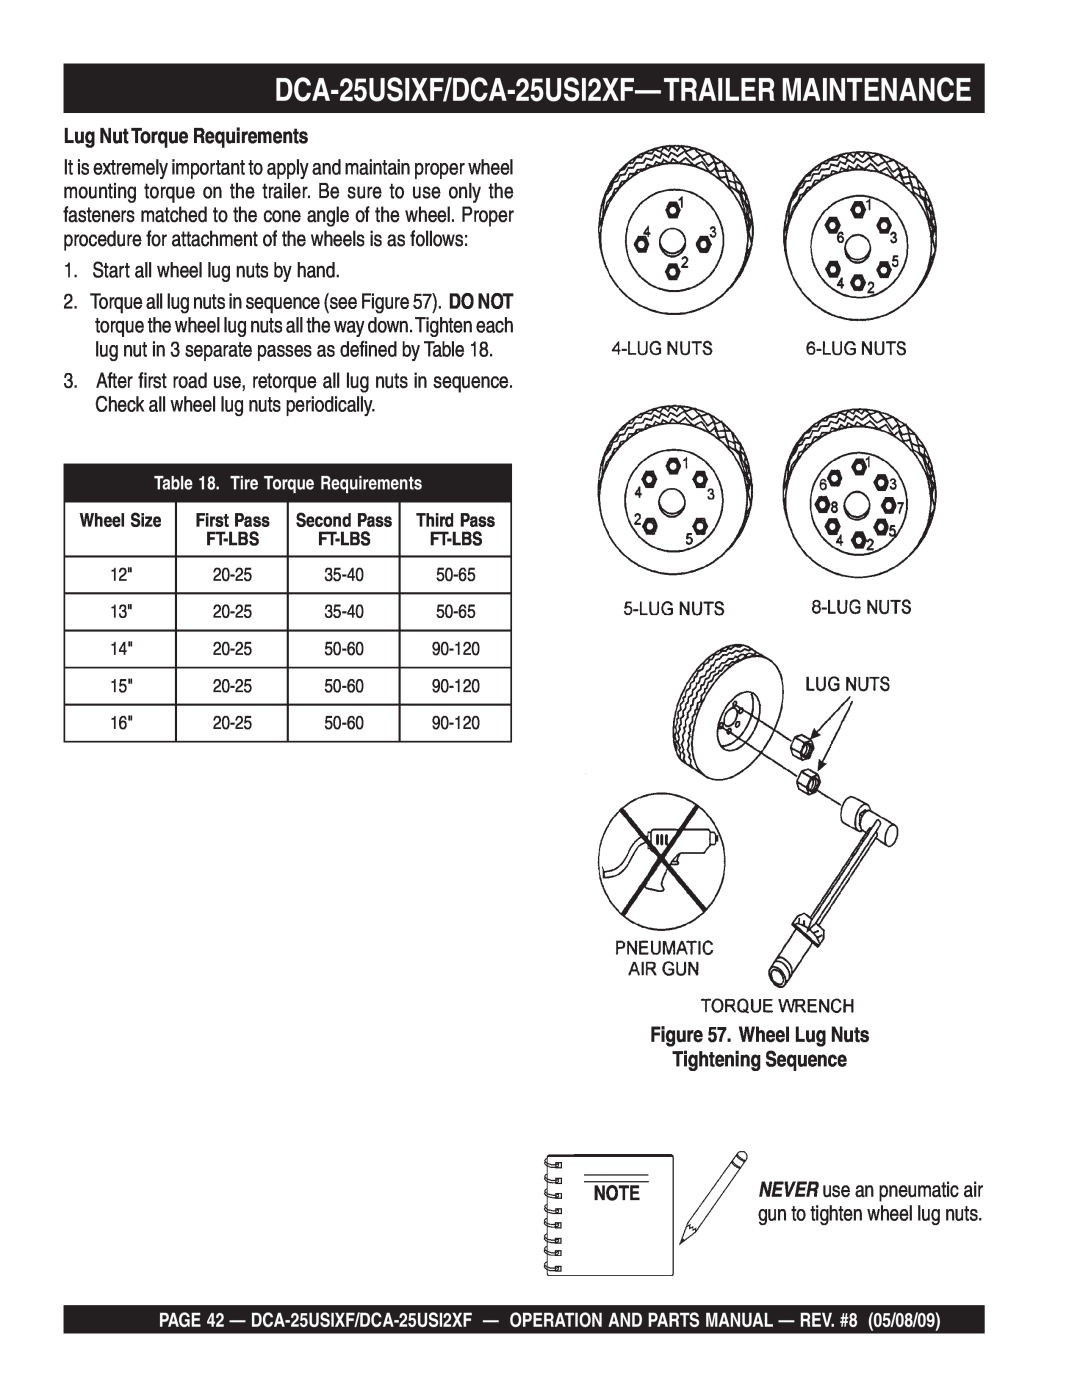 Multiquip DCA-25USIXF/DCA-25USI2XF-TRAILER MAINTENANCE, Lug Nut Torque Requirements, Wheel Lug Nuts Tightening Sequence 